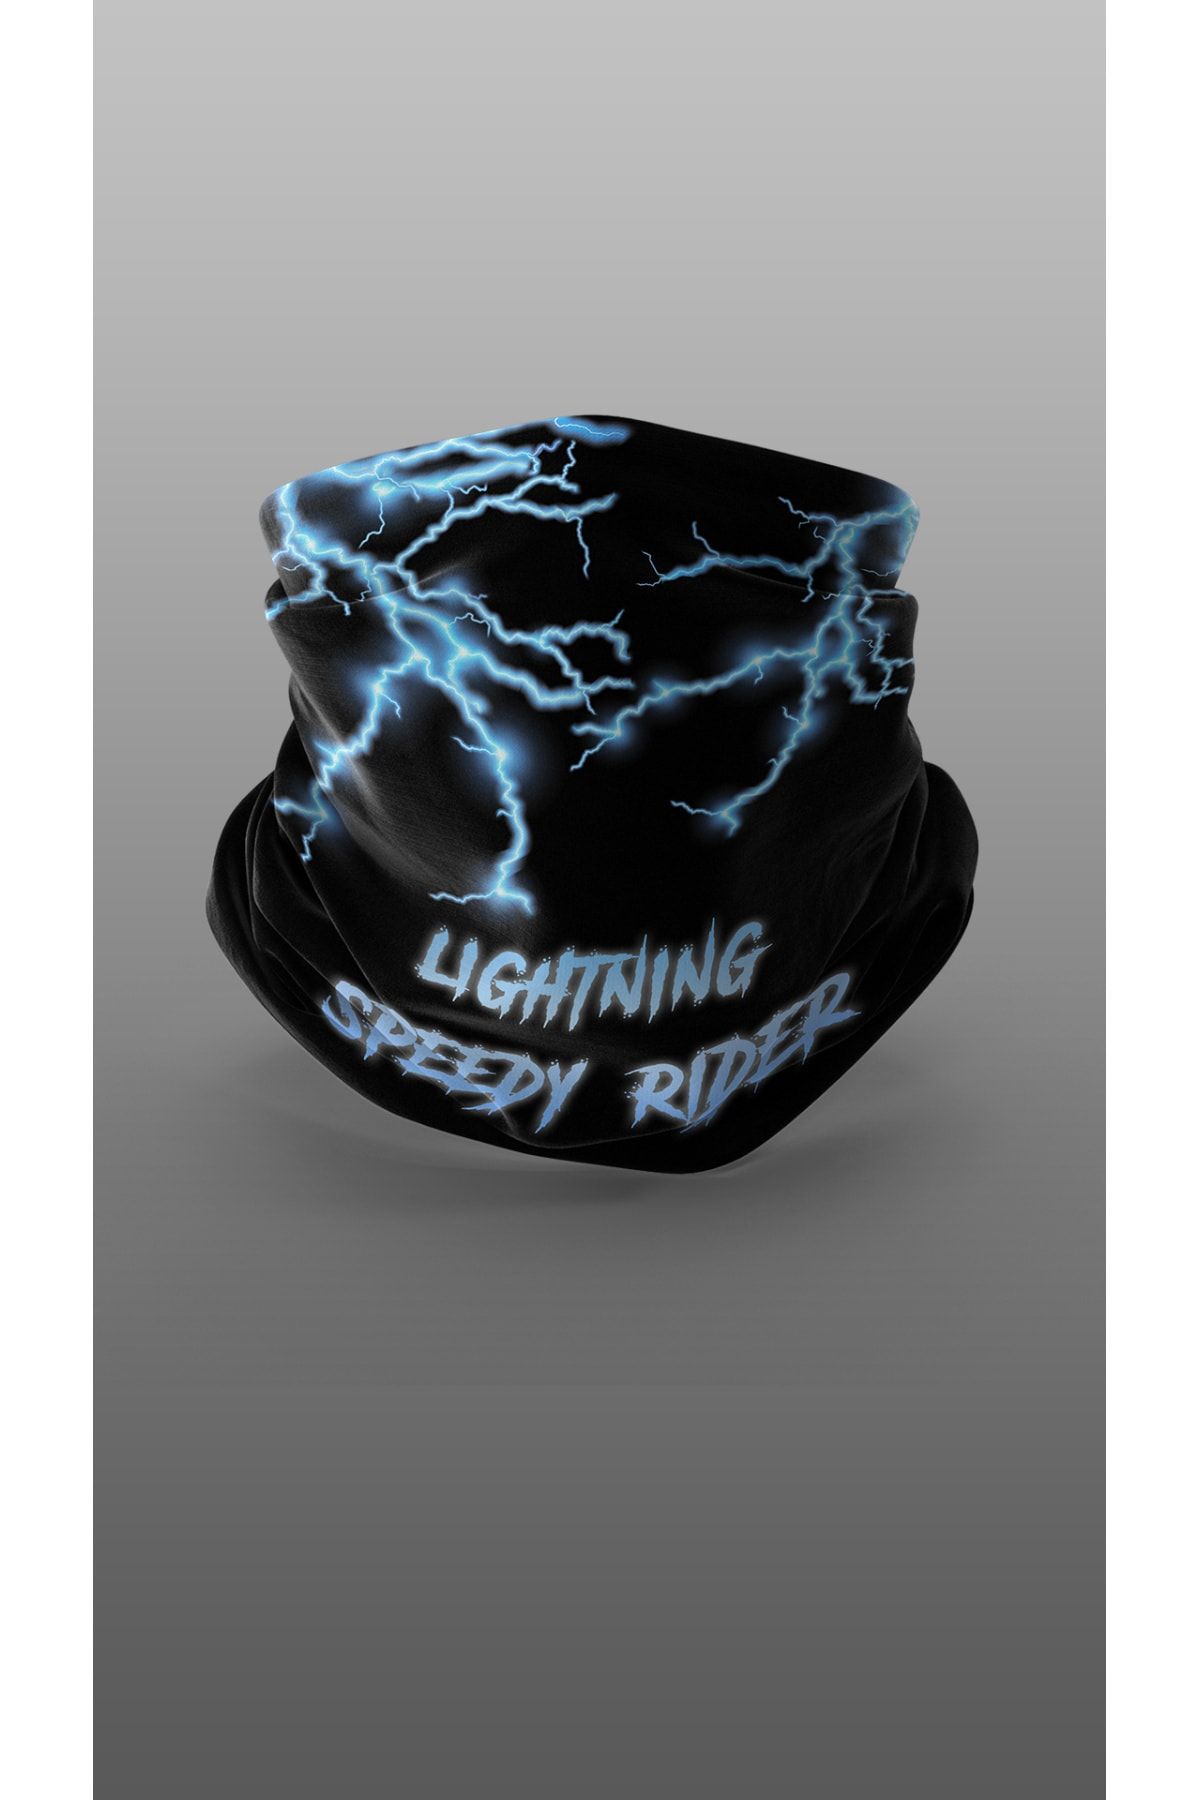 Yeles Lightning Speedy Rider Biker Buff Mask Outdoor Neck Collar